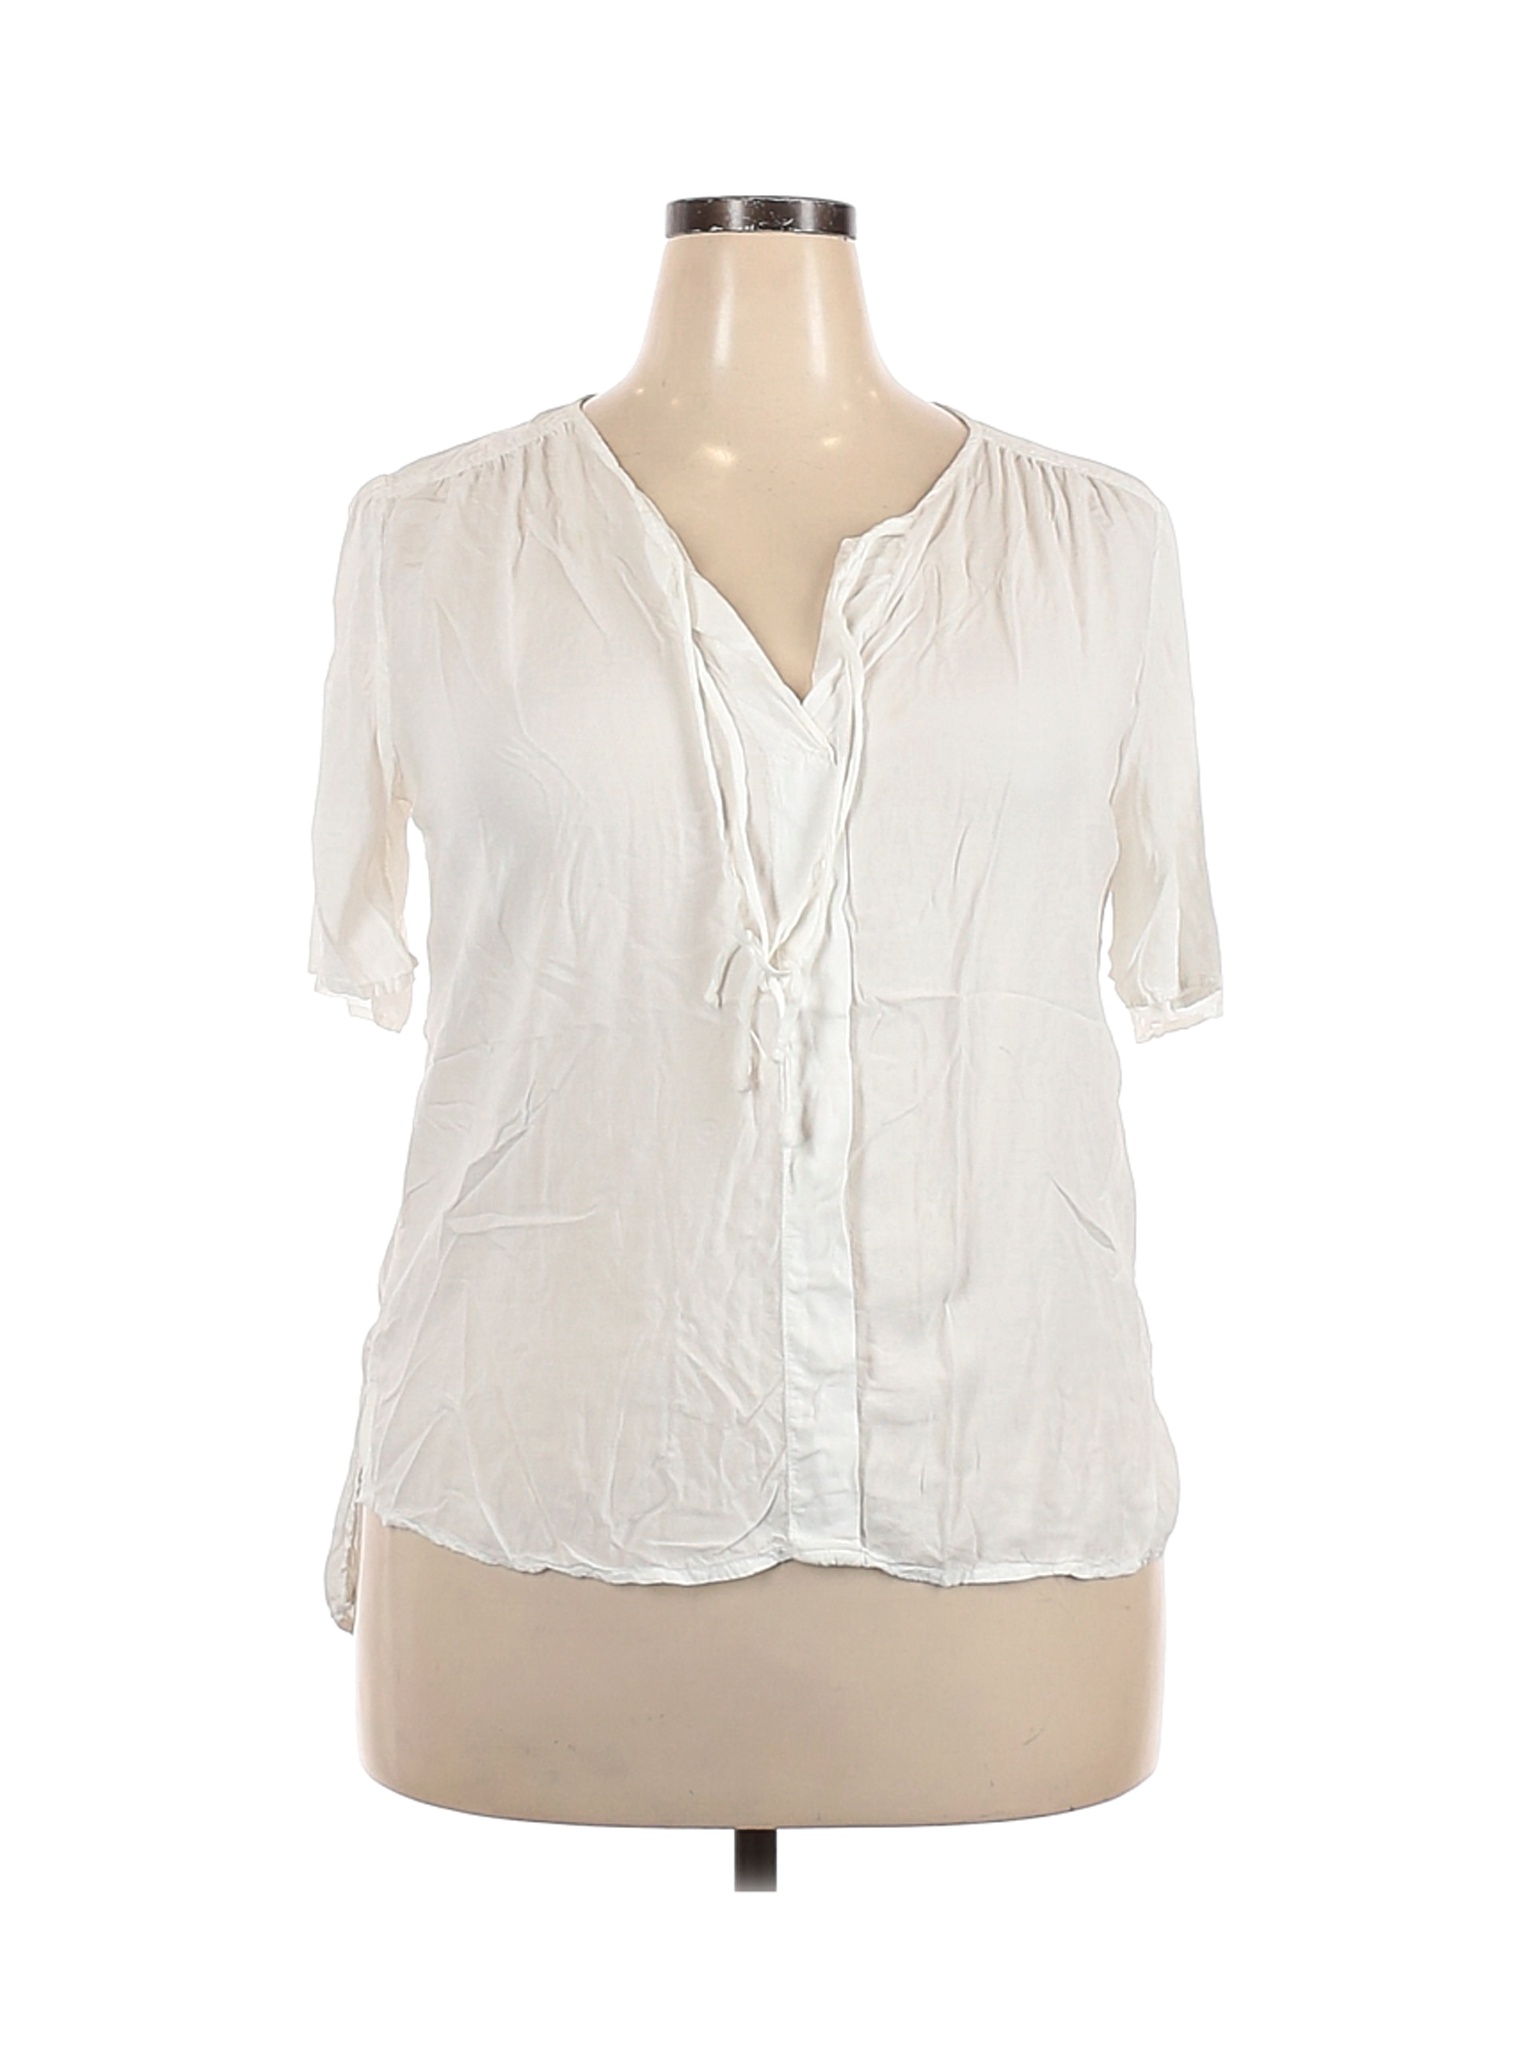 Cloth & Stone Women White Short Sleeve Top L | eBay